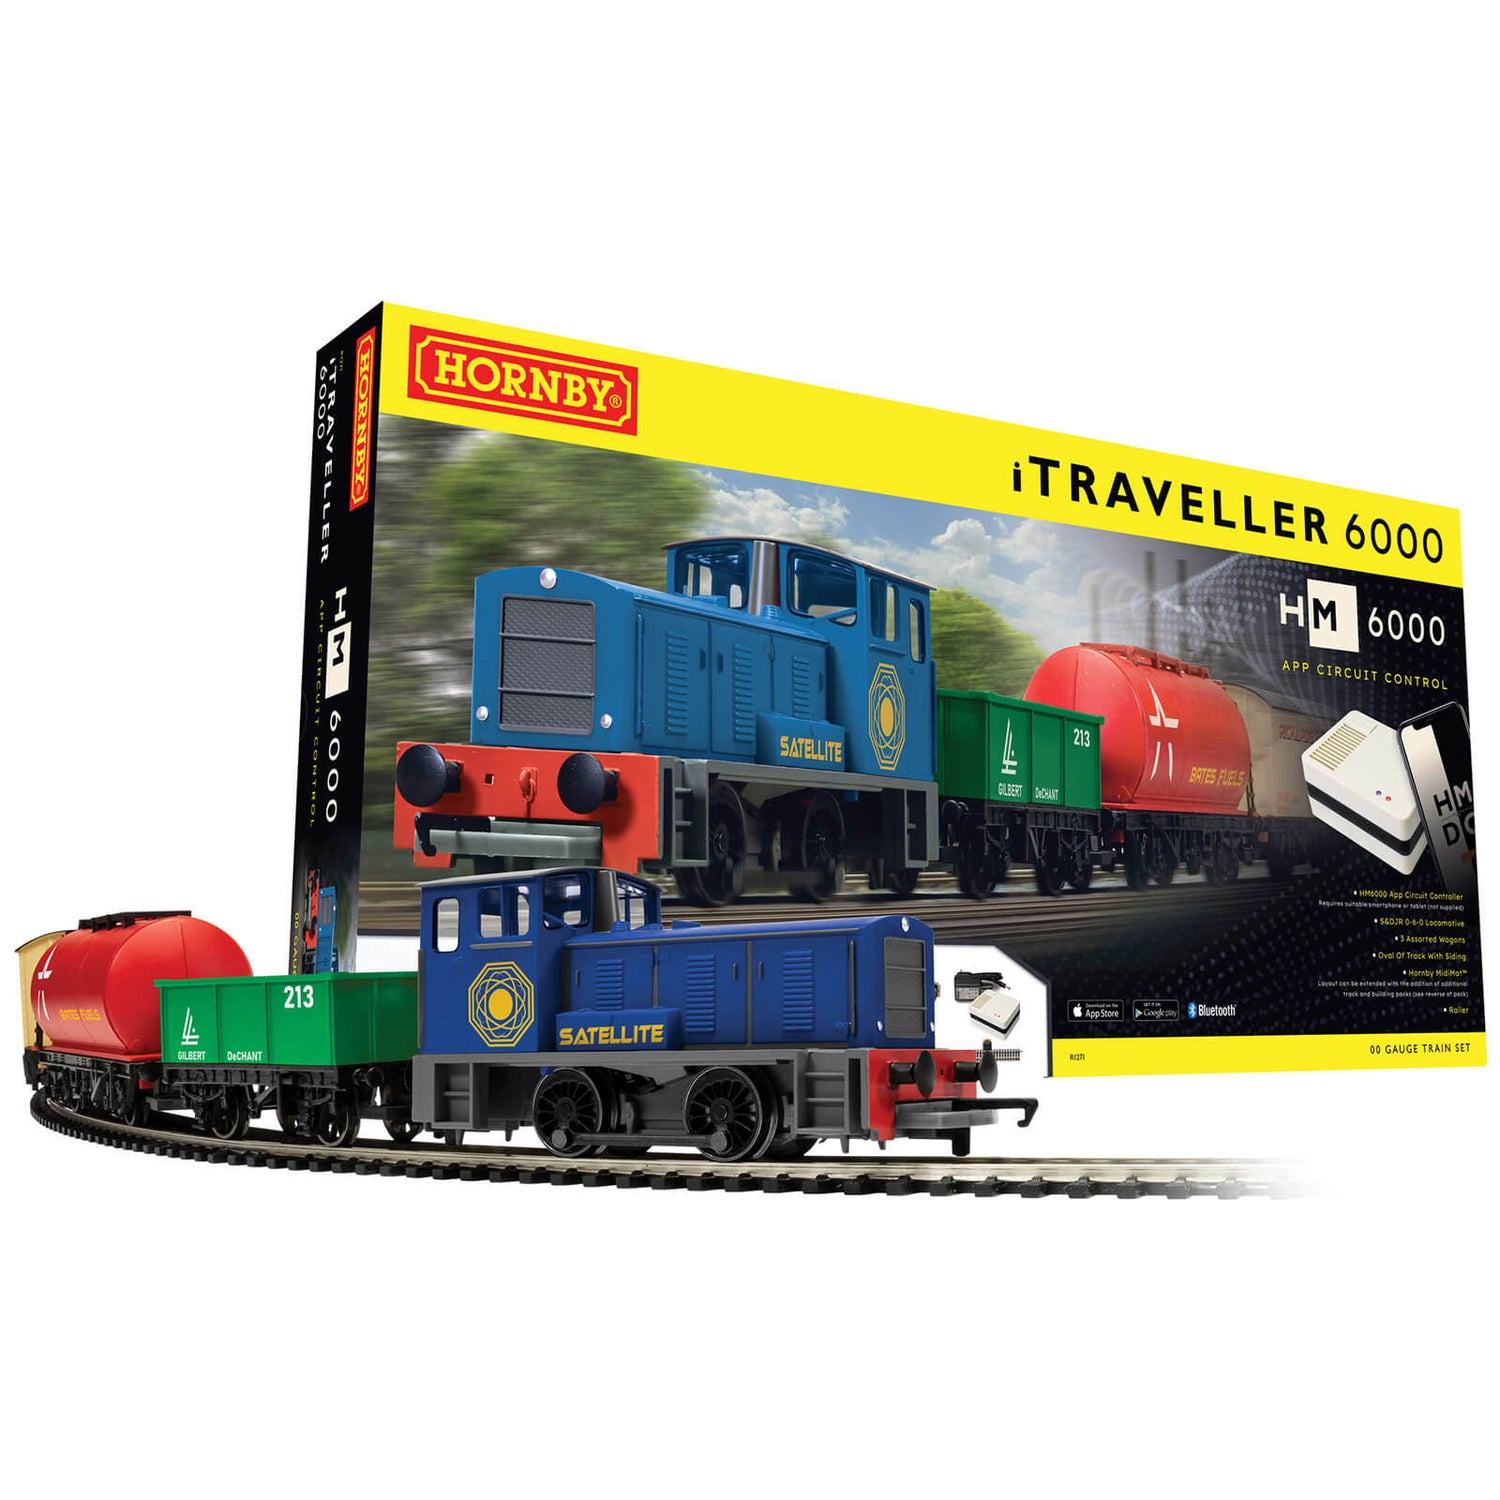 iTraveller 6000 Train Set (1:76 Scale)